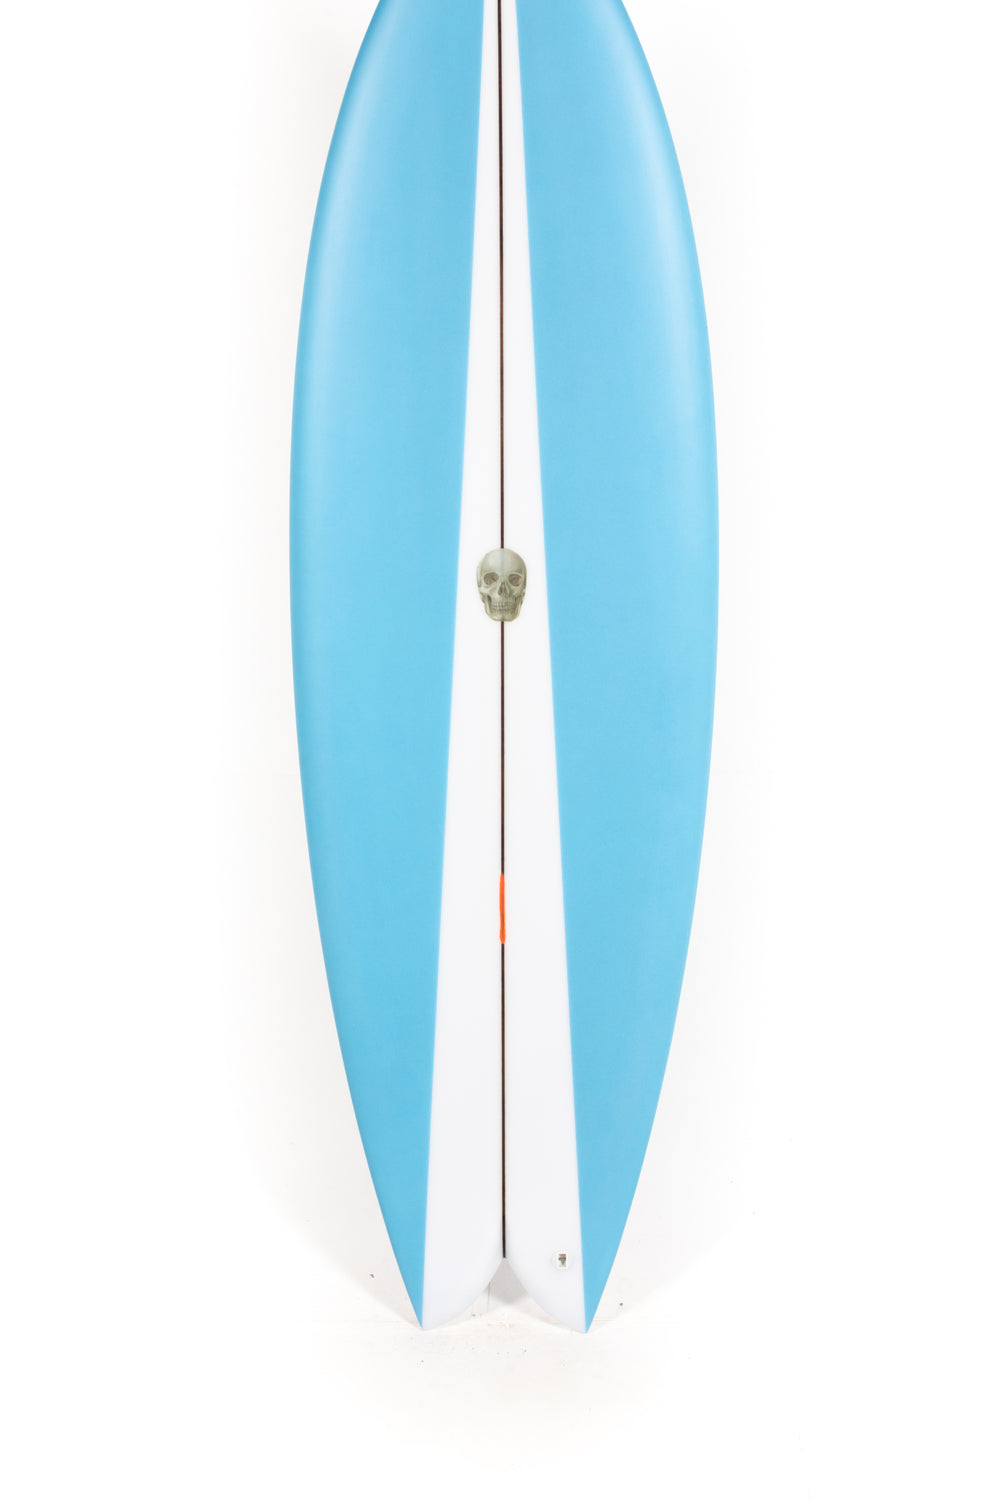 Christenson Surfboards - NAUTILUS - Buy at PUKAS SURF SHOP